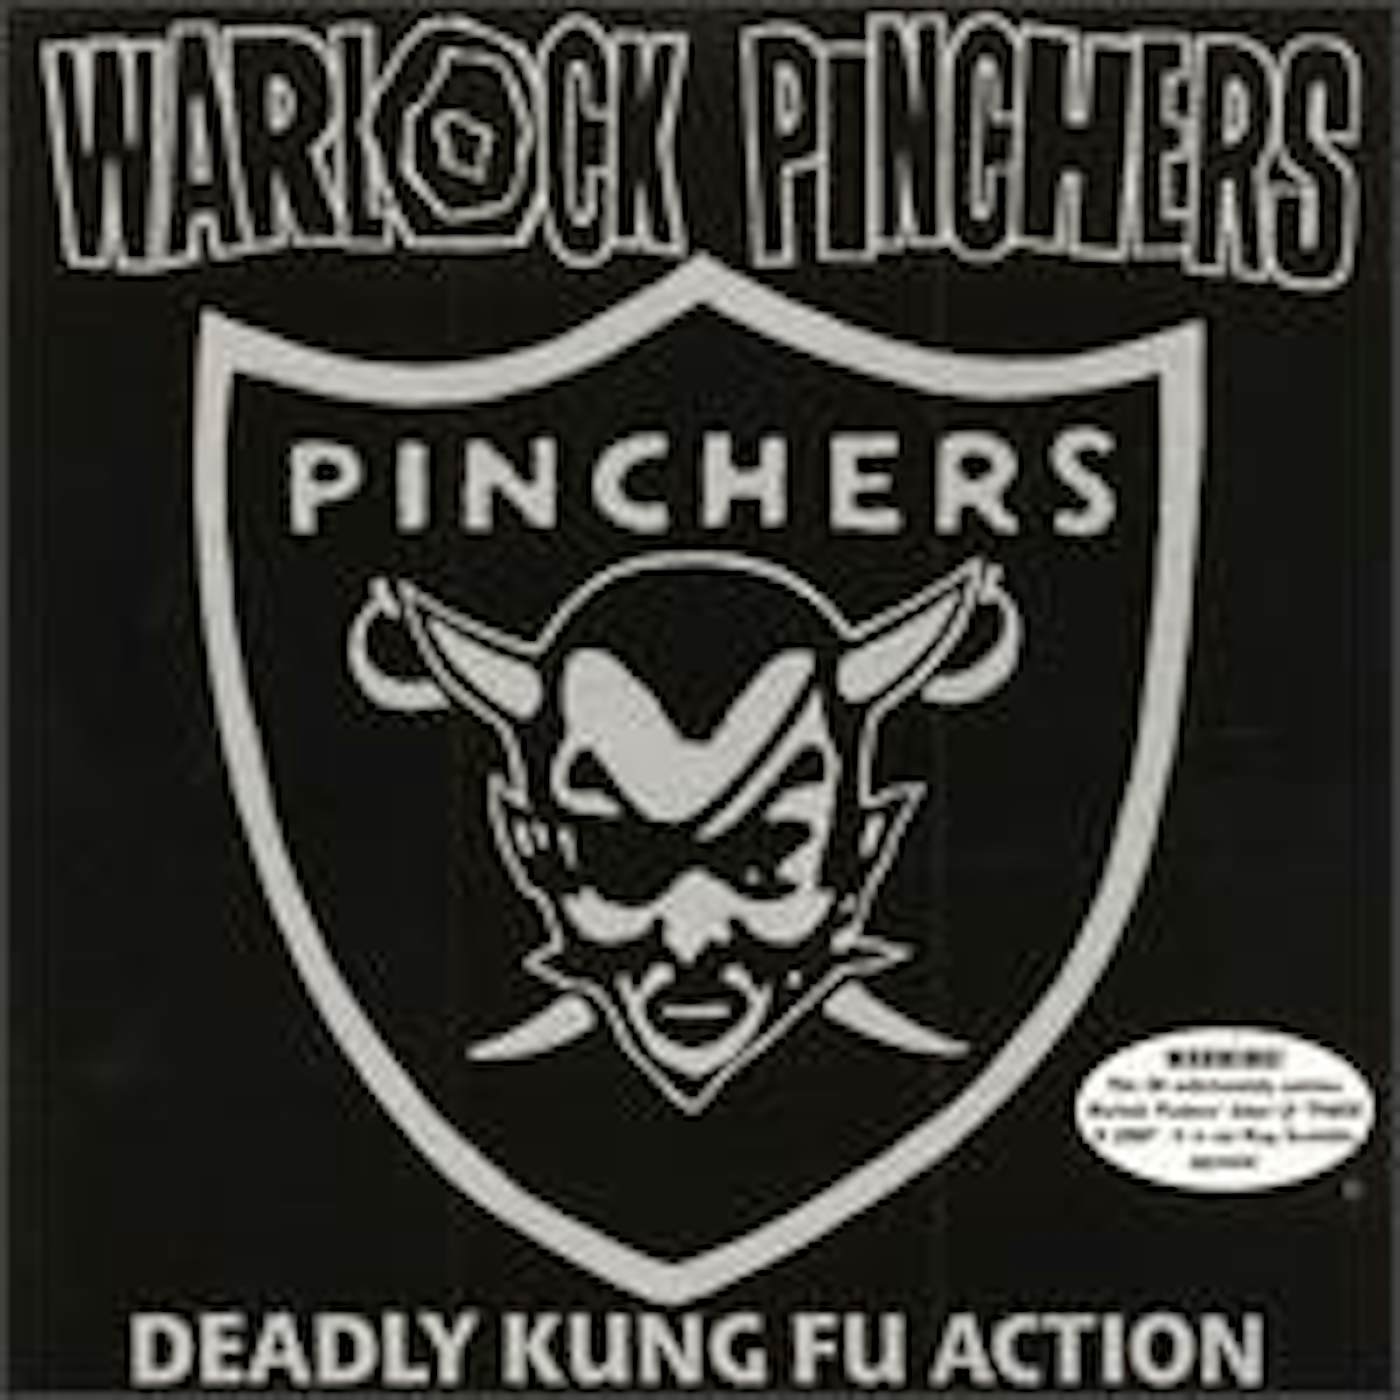 Warlock Pinchers DEADLY KUNG CD